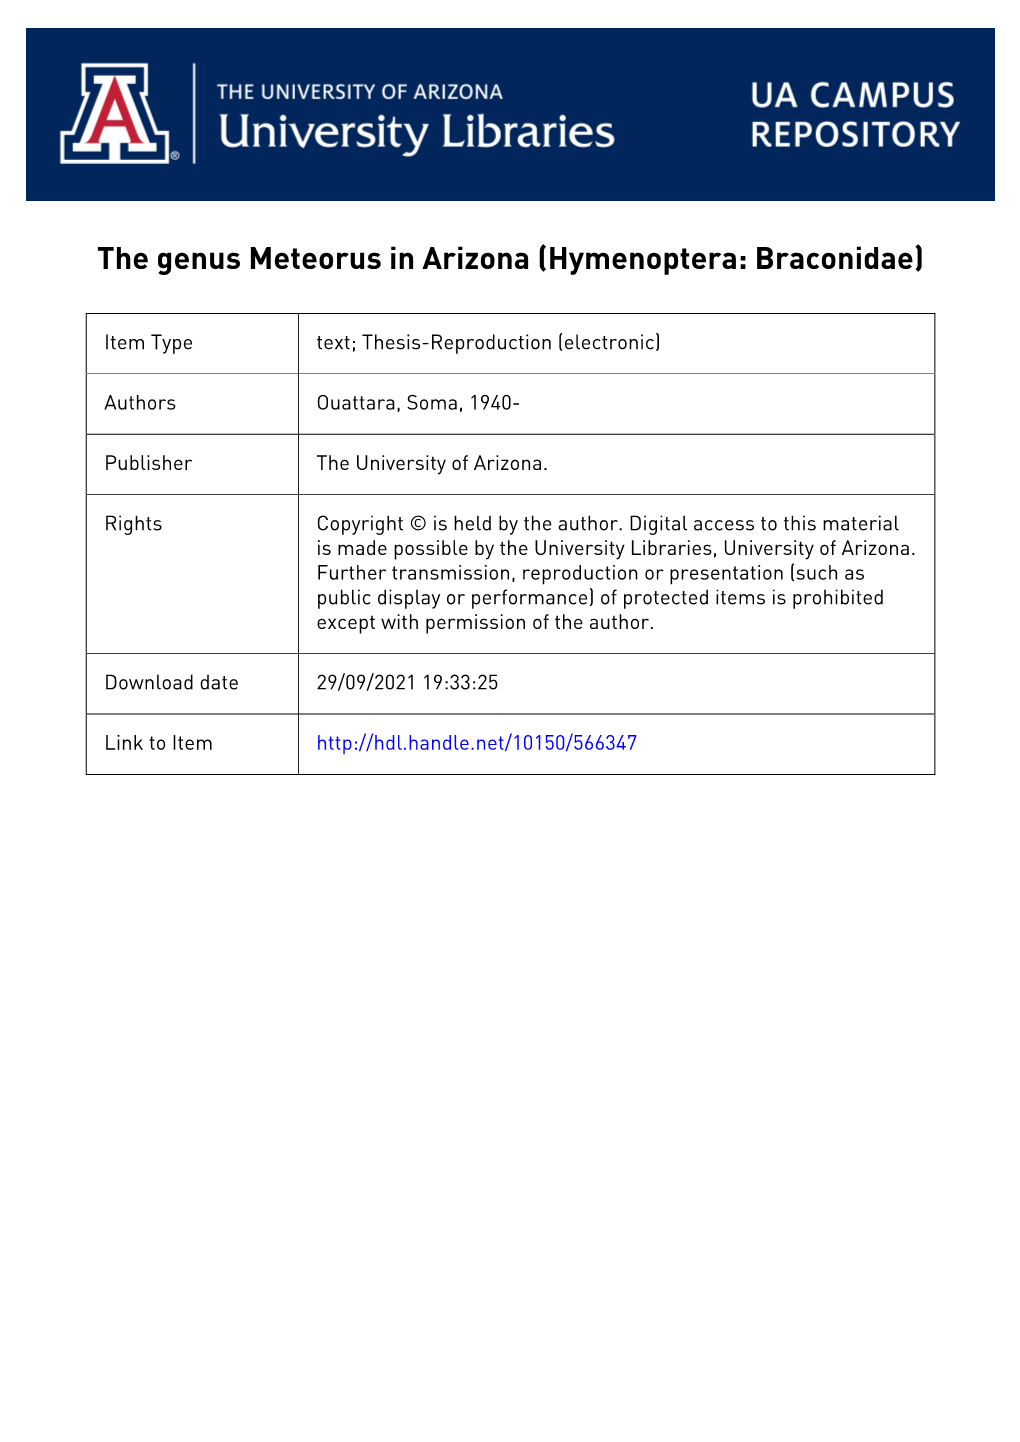 The Genus Meteorus in Arizona (Hymenoptera: Braconidae)